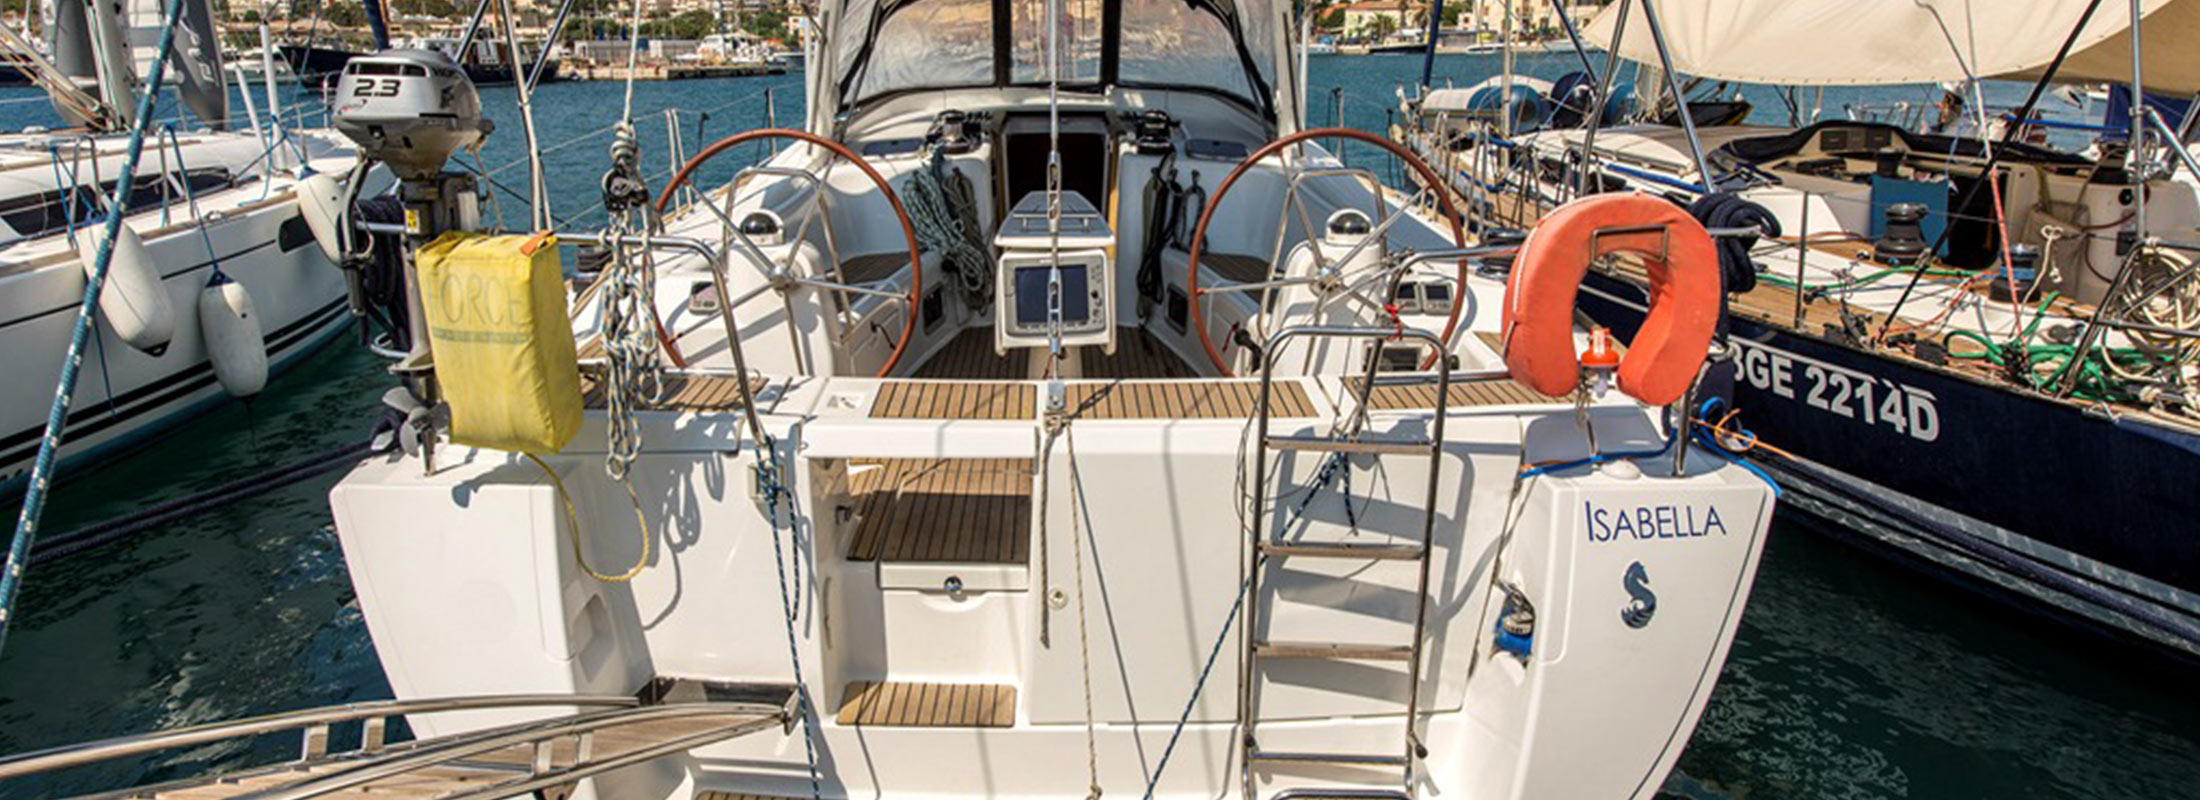 Isabella-sailing-yacht-charter-a-yacht-slider-2.jpg